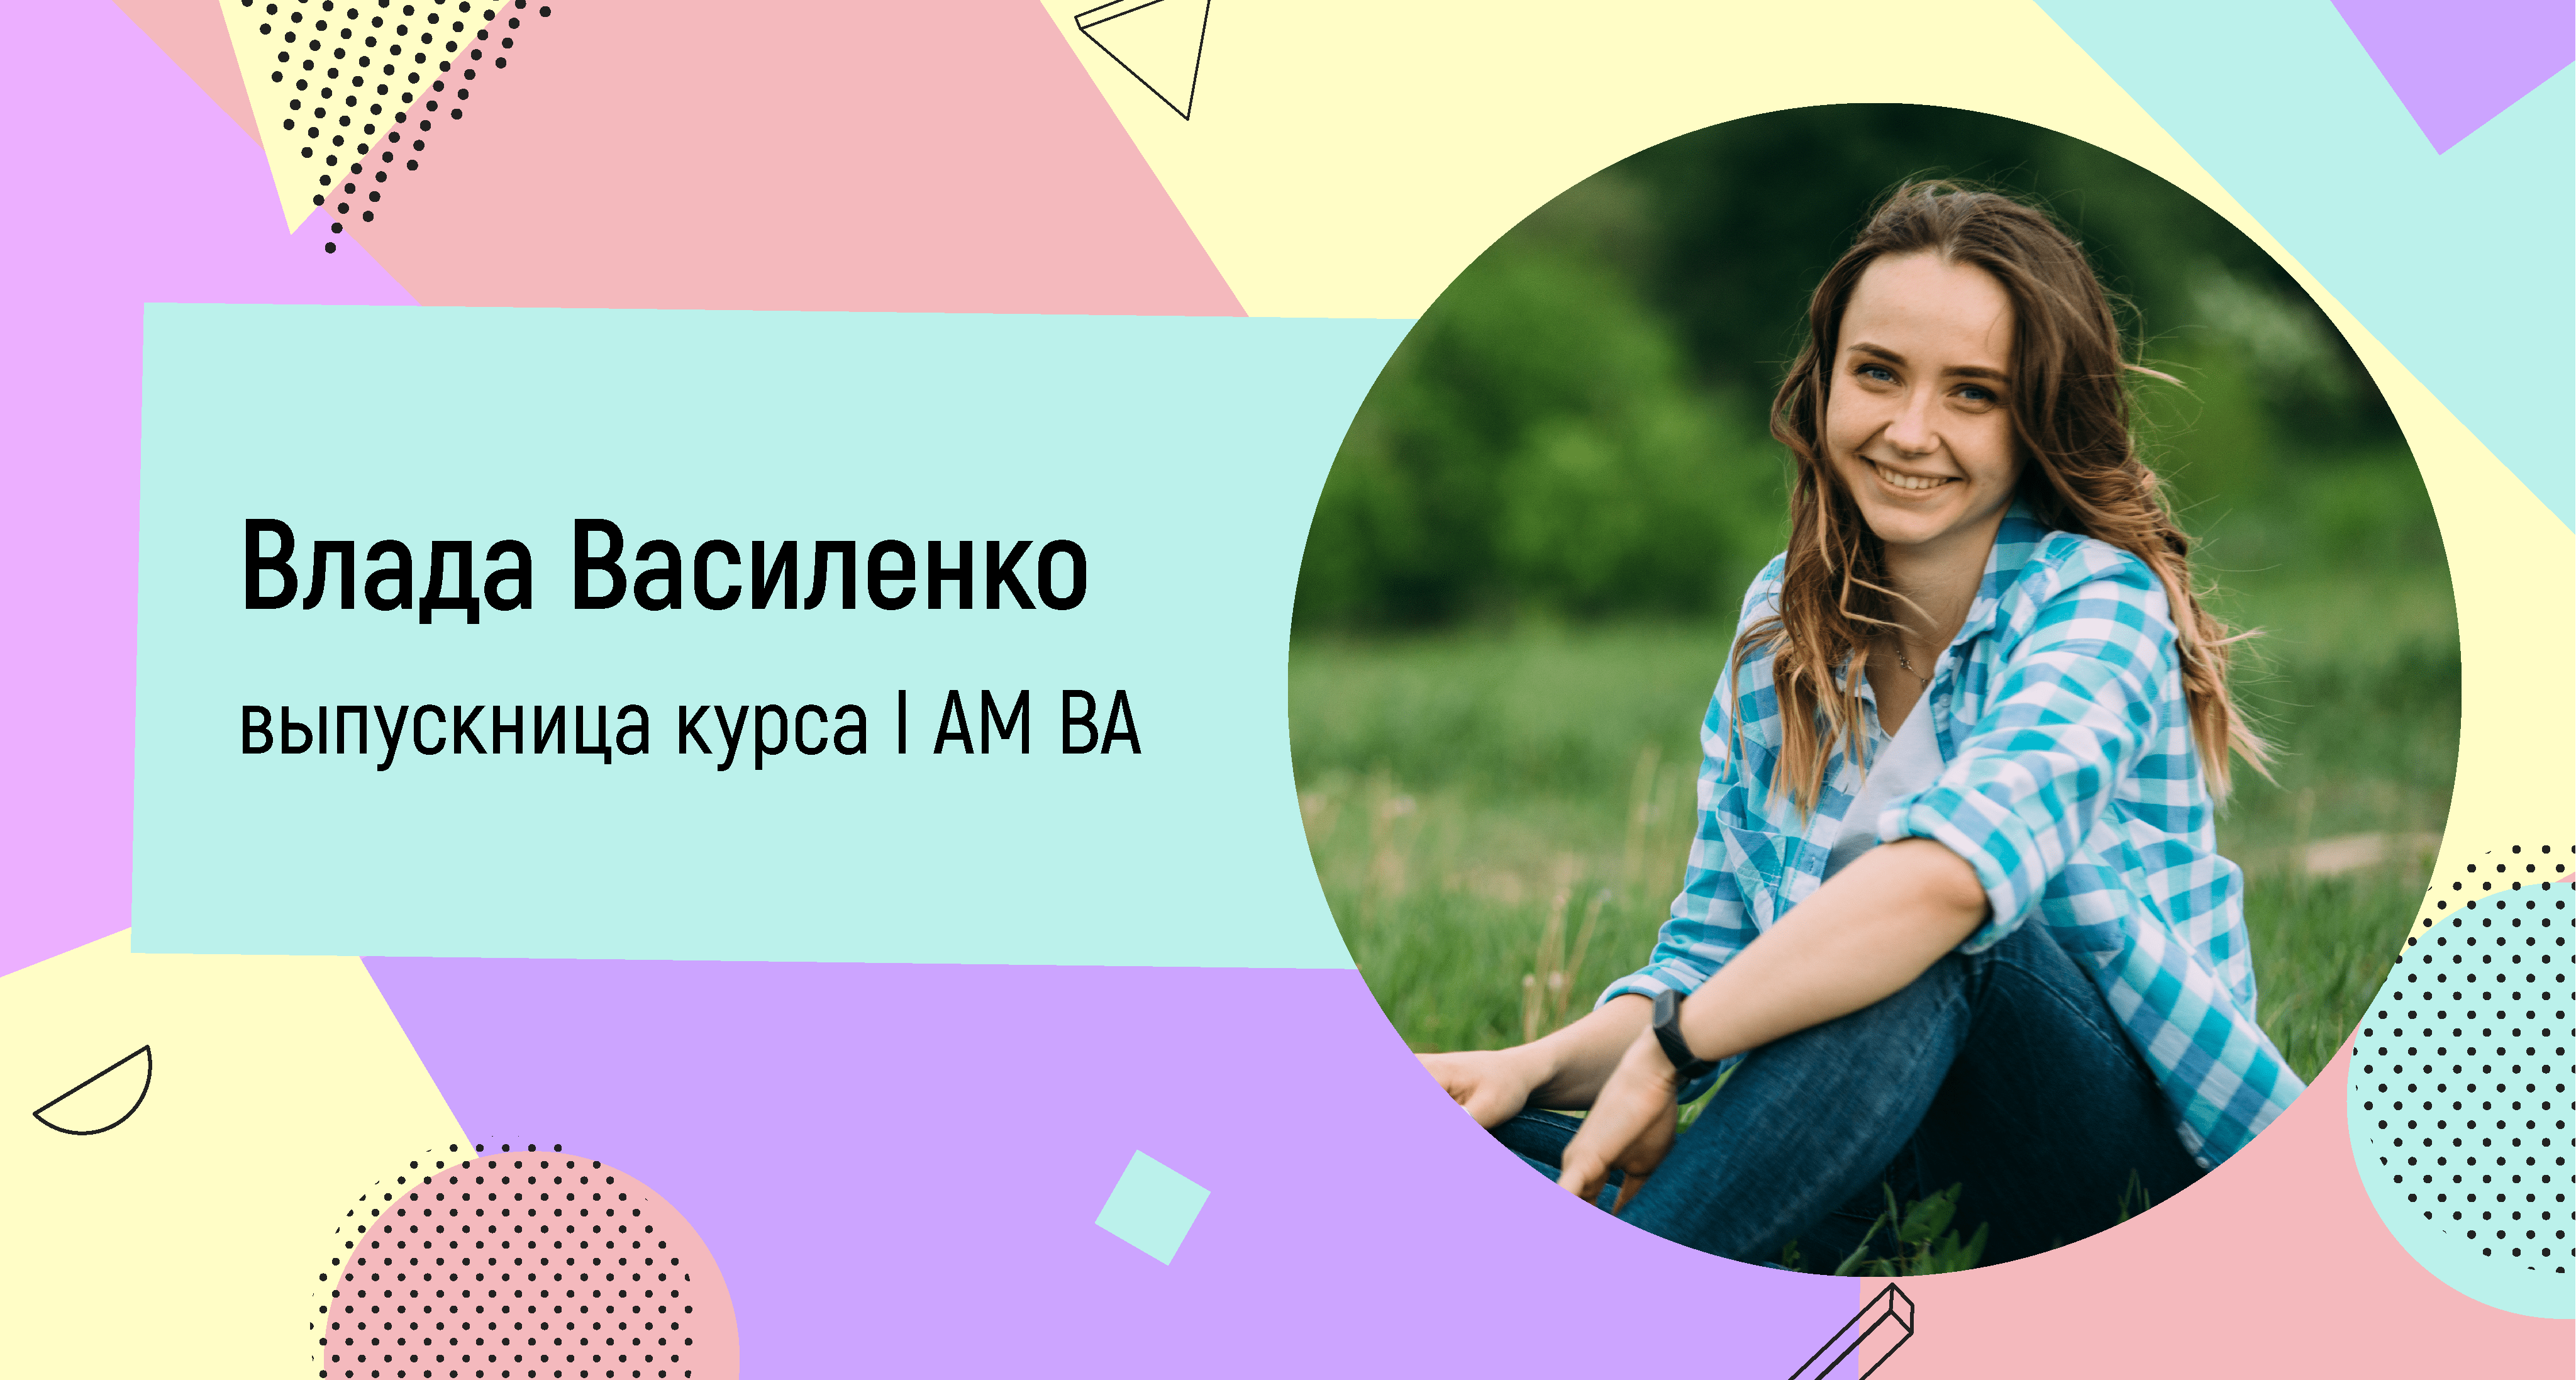 Как Влада Василенко стала бизнес-аналитиком в IT-компании 1